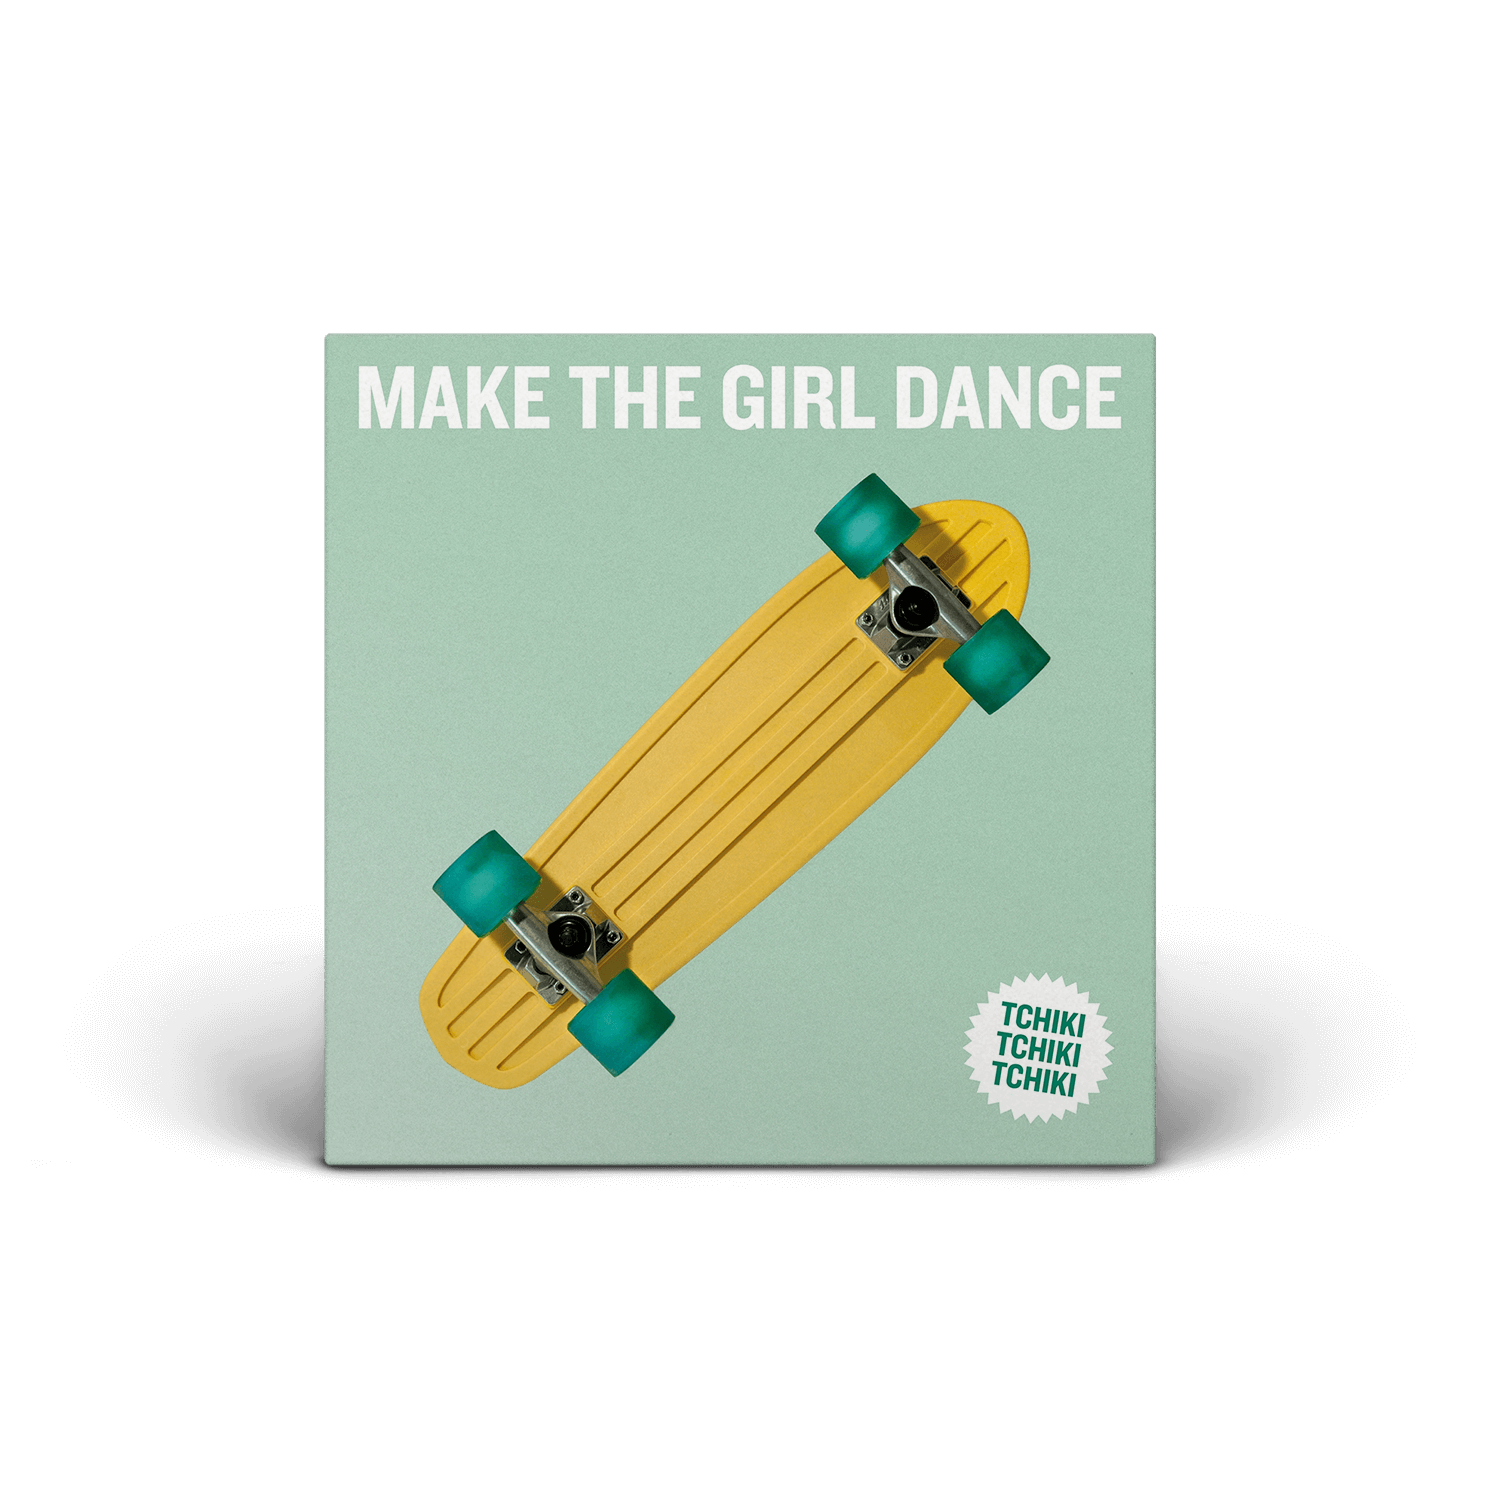 Make the Girl Dance - Tchiki Tchiki Tchiki - Digital